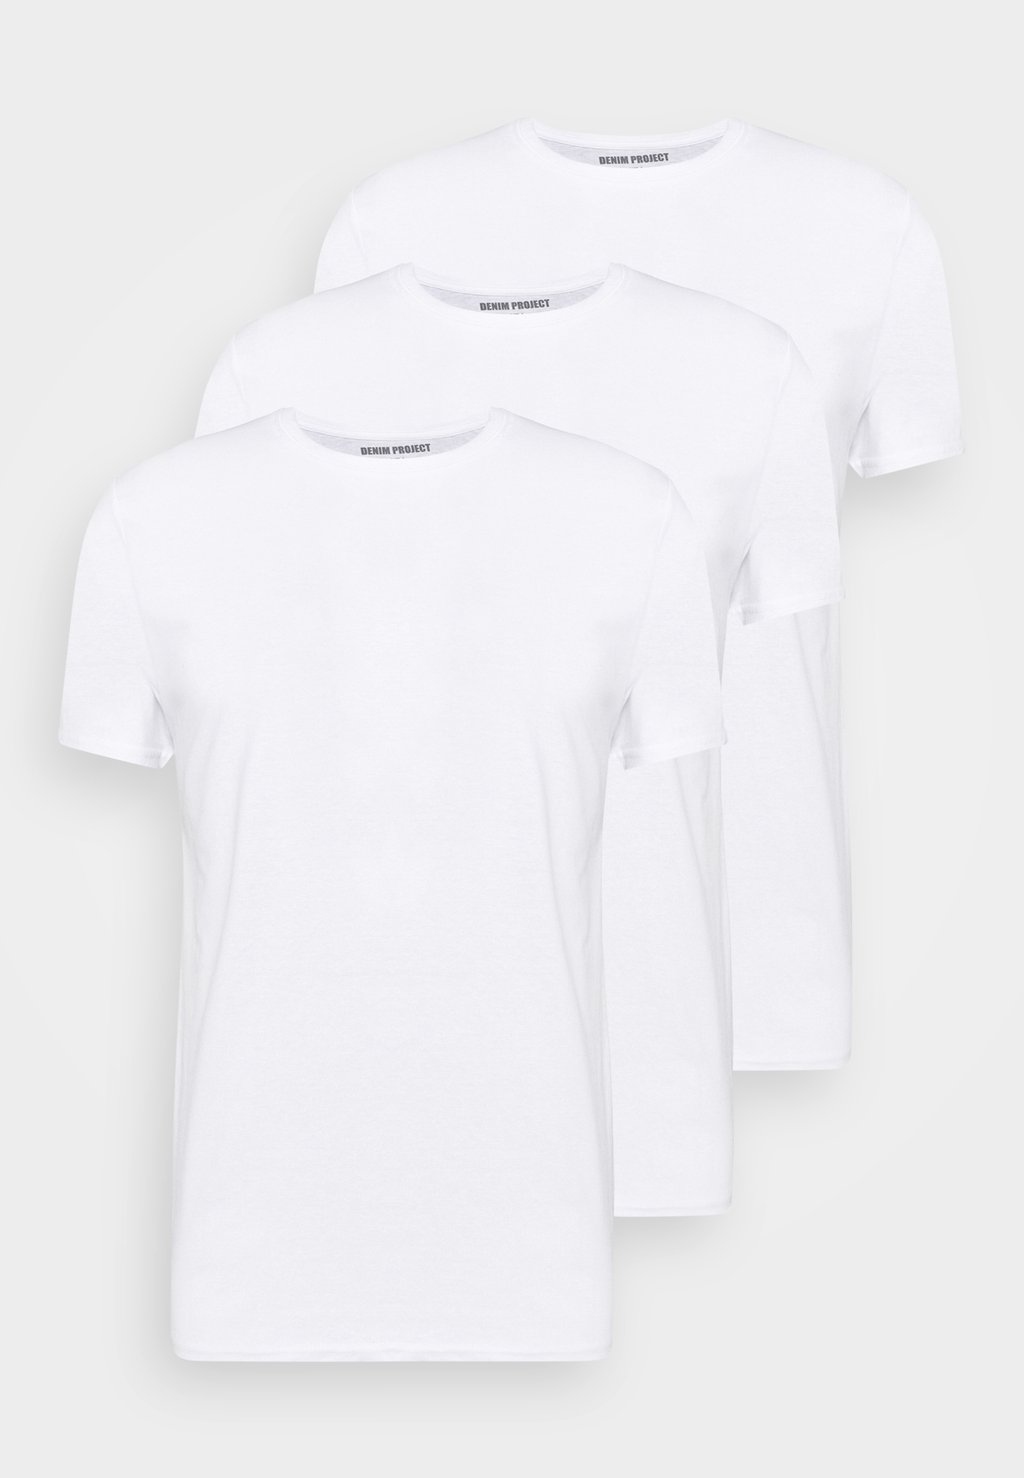 Базовая футболка 3 ПАКЕТА Denim Project, белая